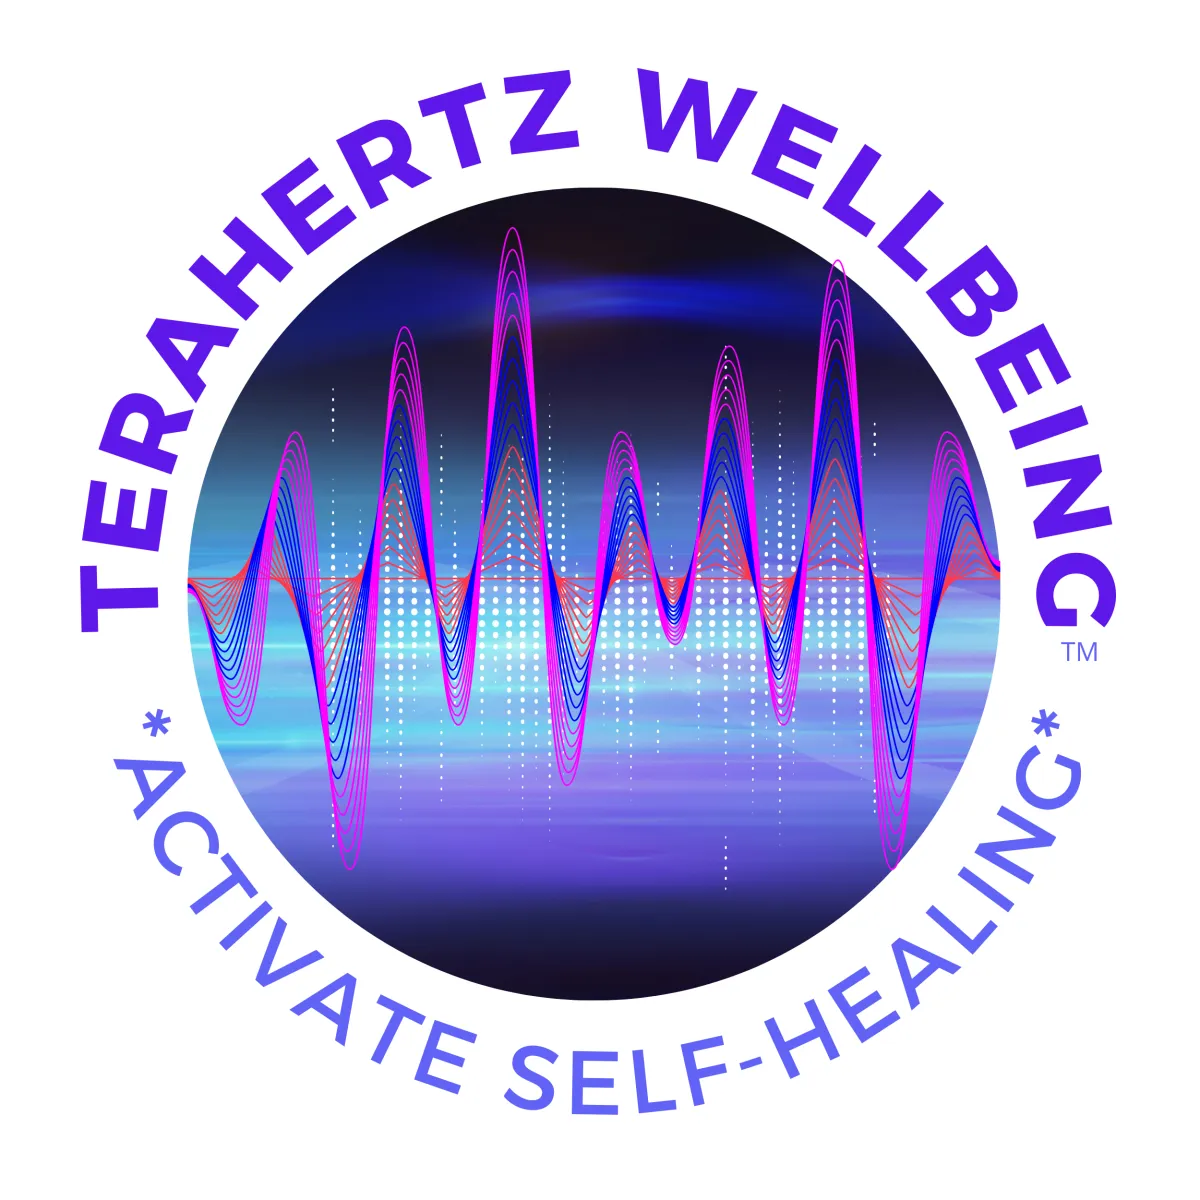 Terahertz Wellbeing Logo - Activate Self Healing - purple frequency circle